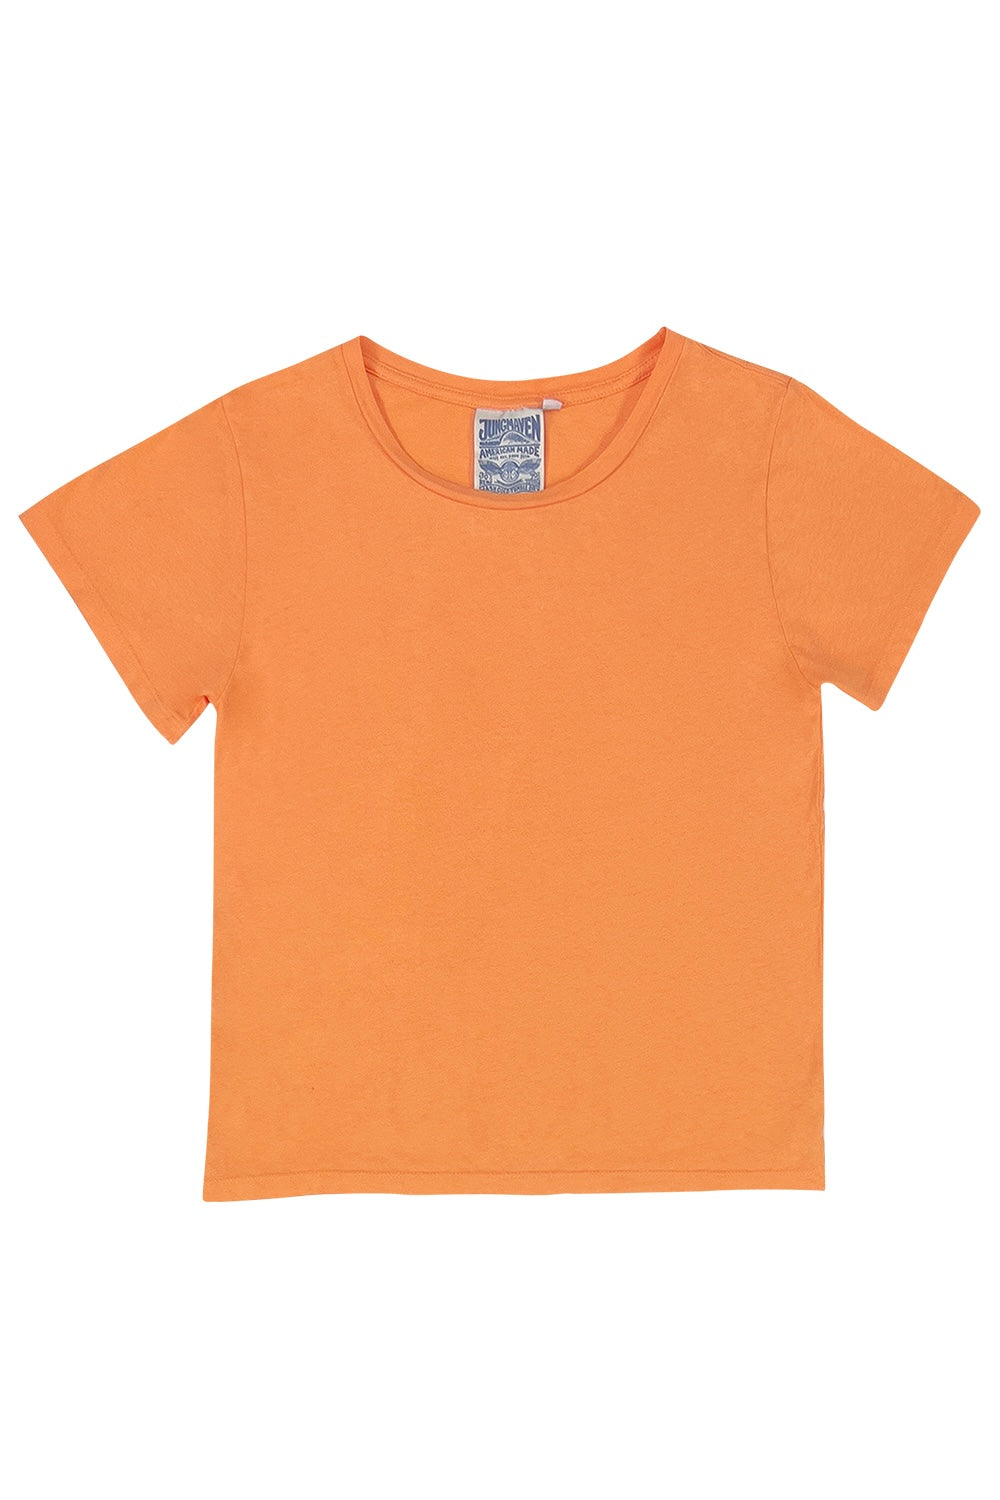 Ojai Tee | Jungmaven Hemp Clothing & Accessories / Color: Apricot Crush